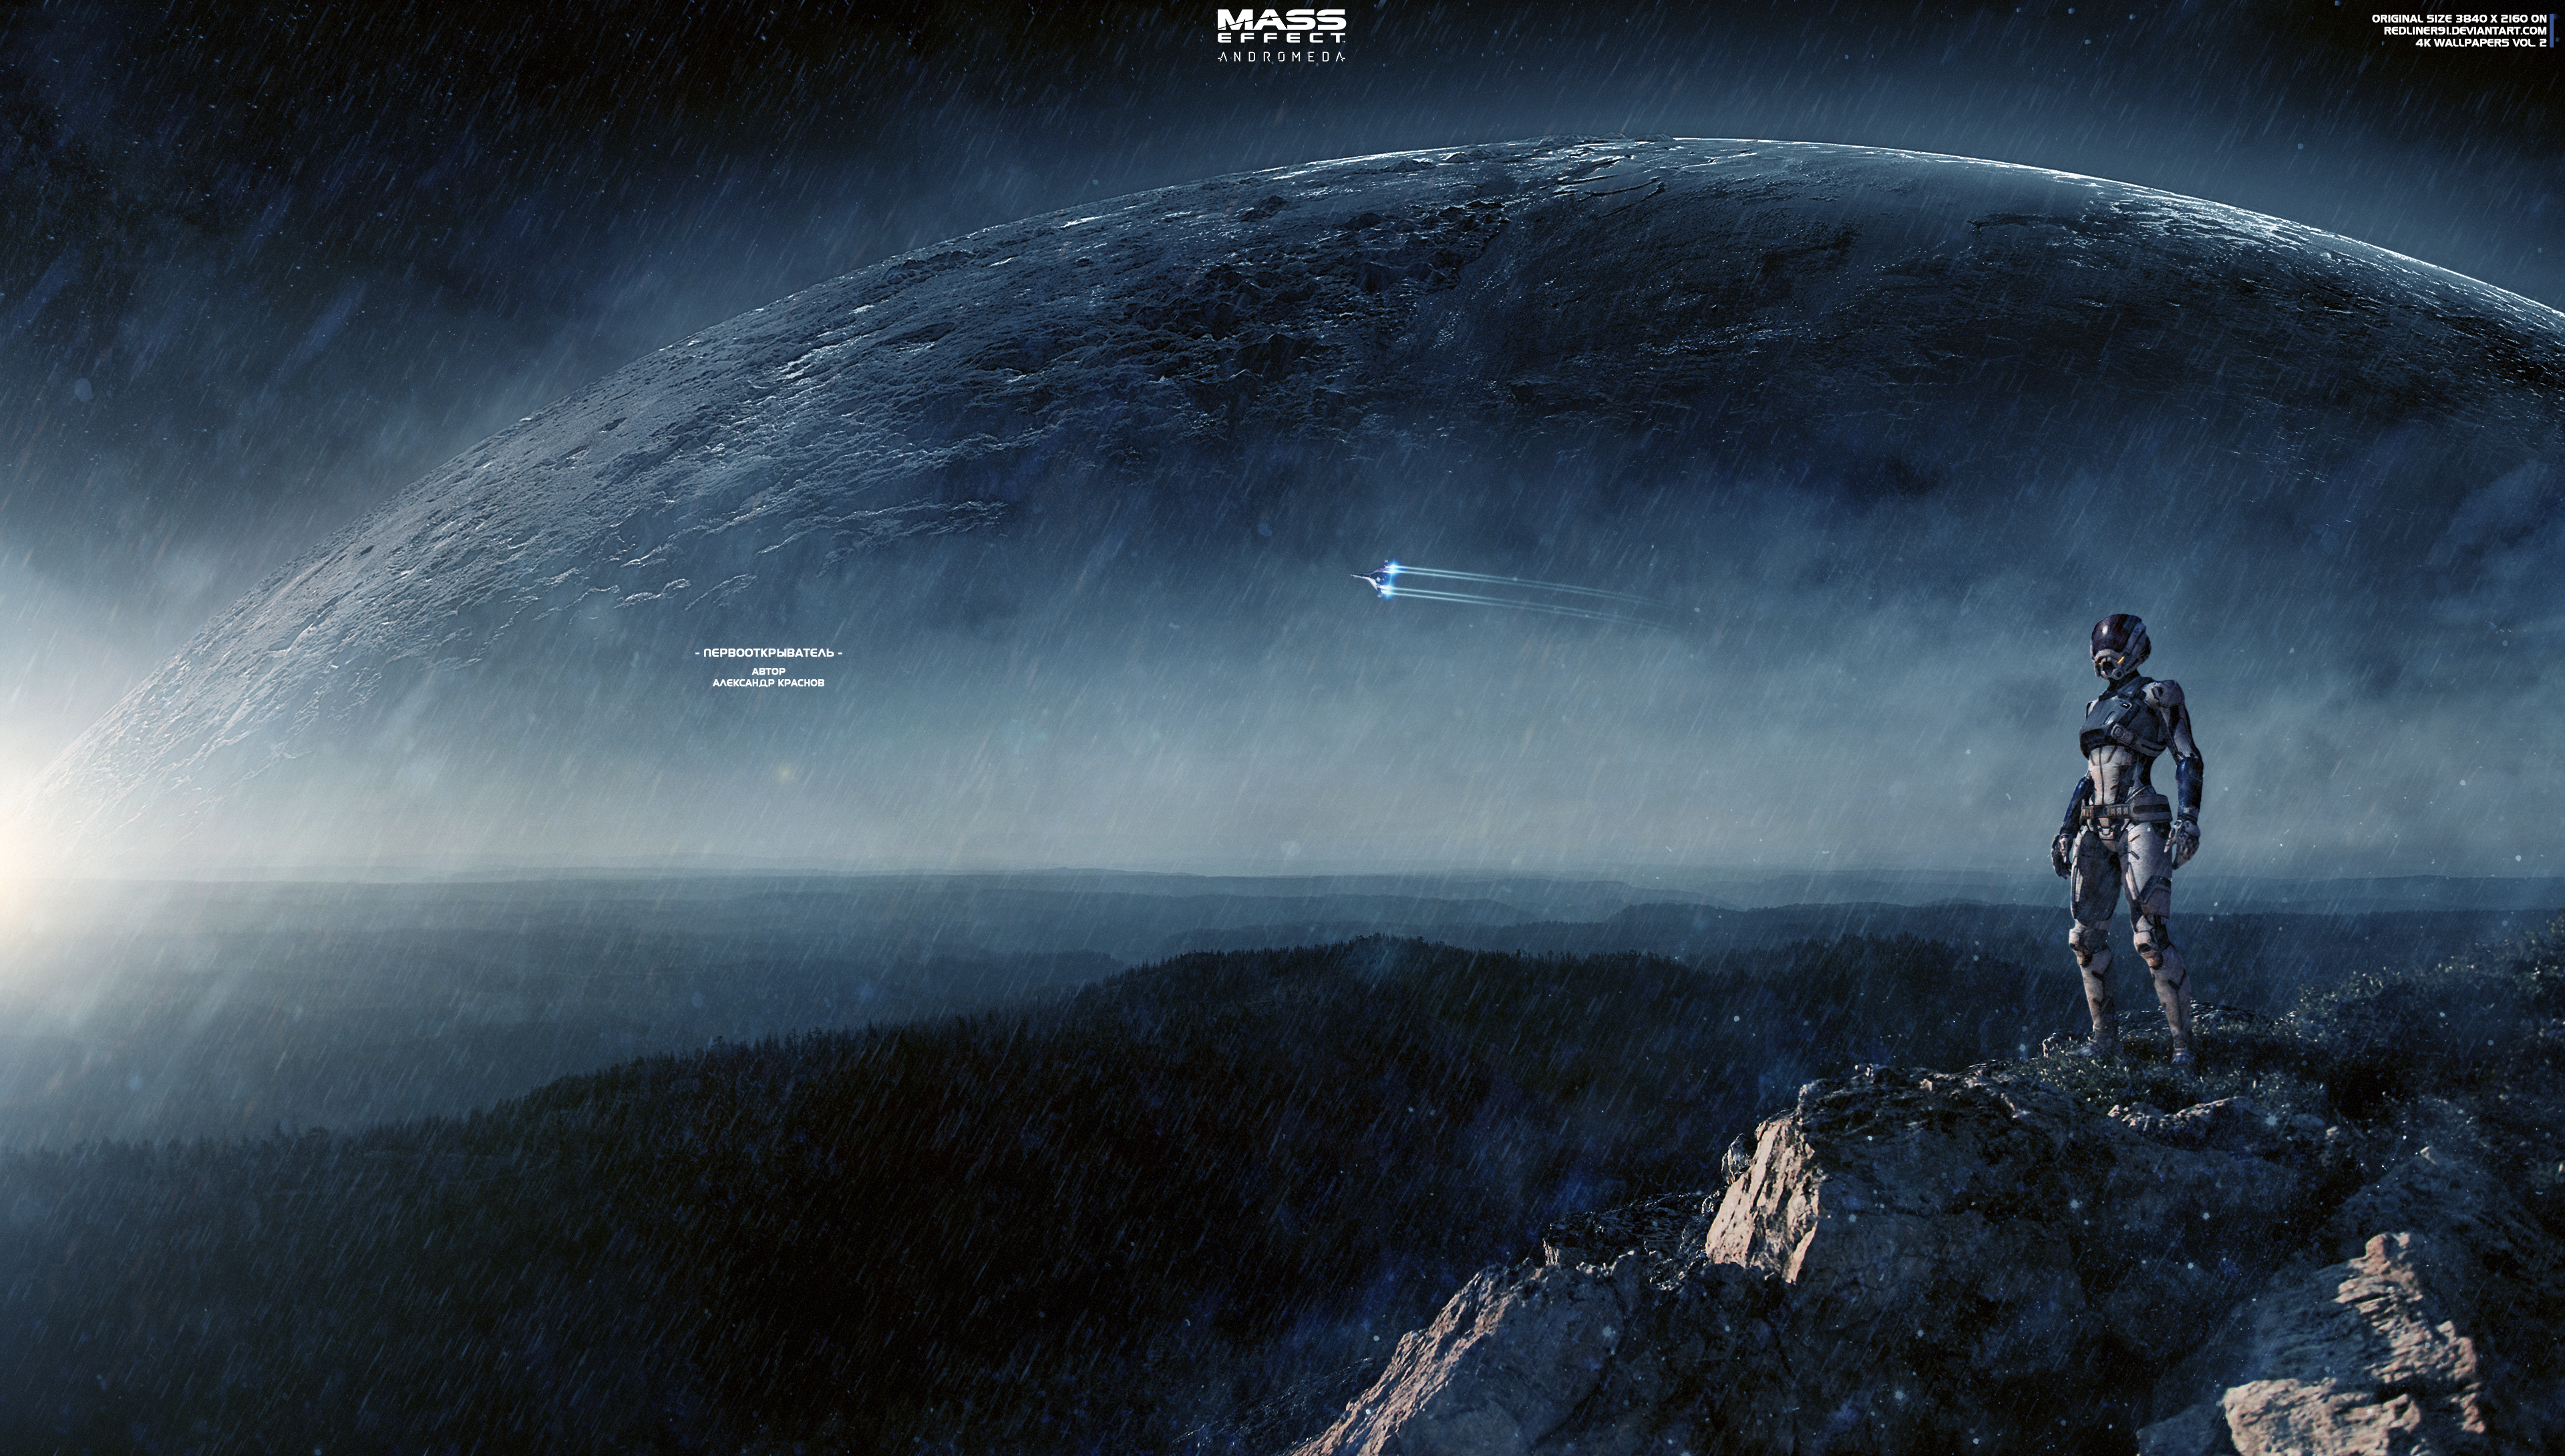 Mass Effect: Andromeda 4k Ultra HD Wallpaper by Alexander Manahov